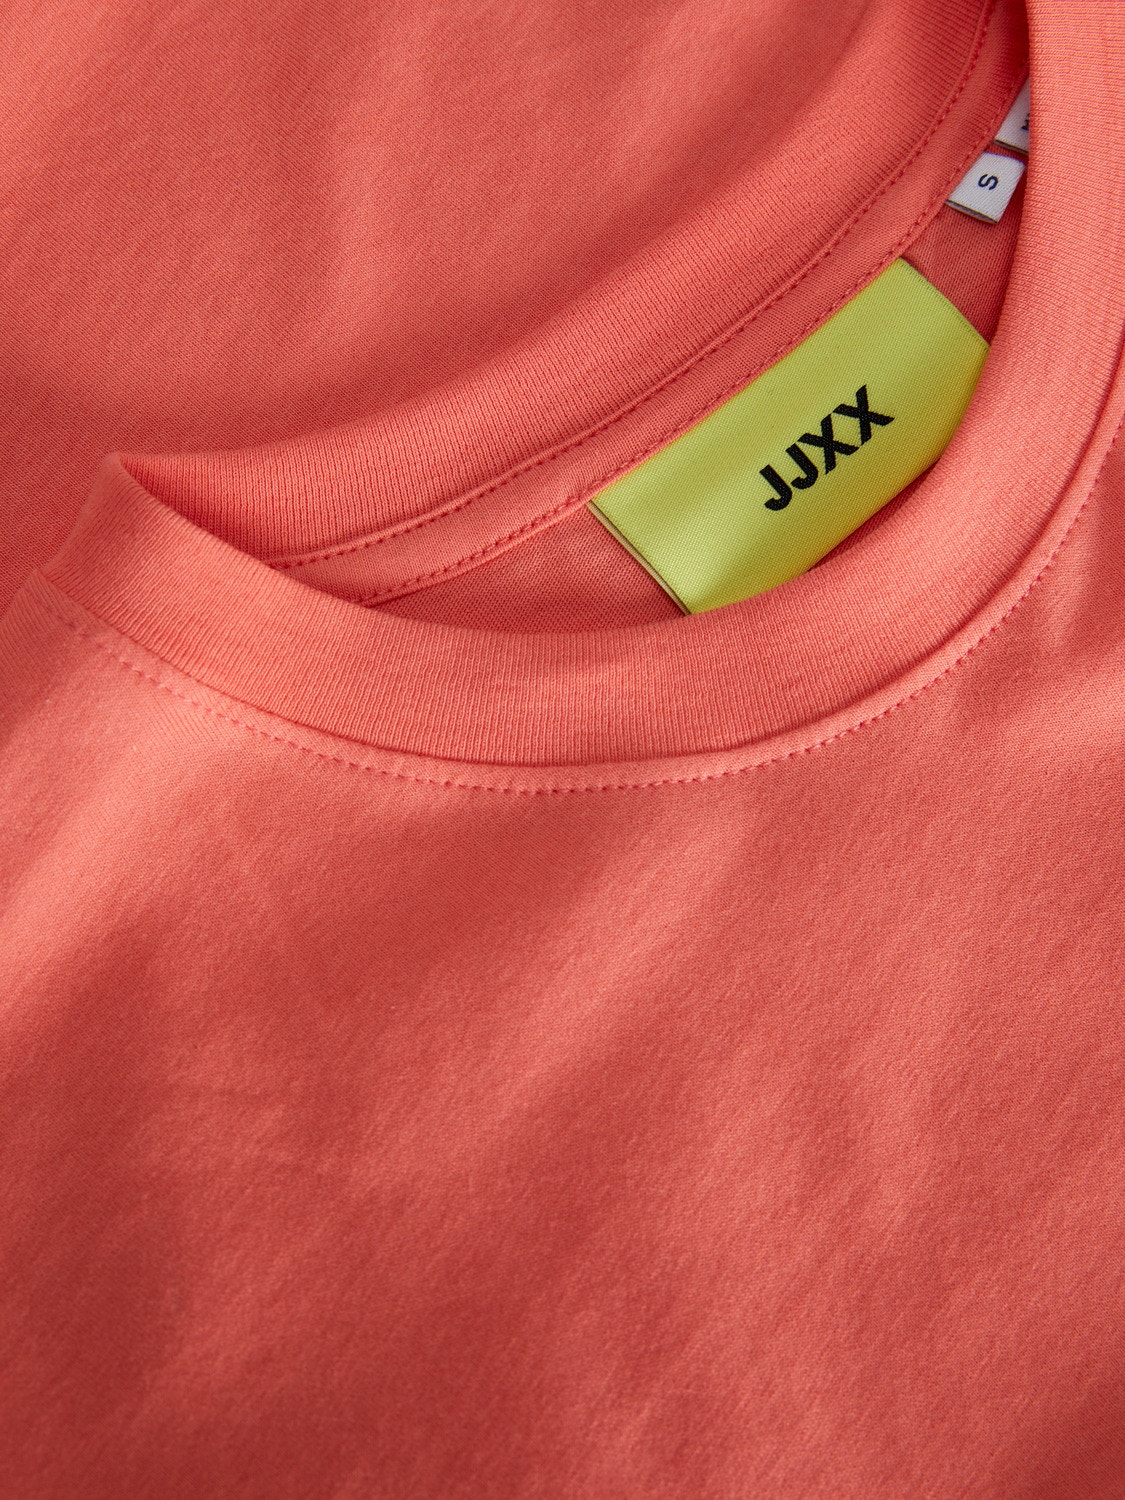 JJXX Καλοκαιρινό μπλουζάκι -Peach Echo  - 12205777